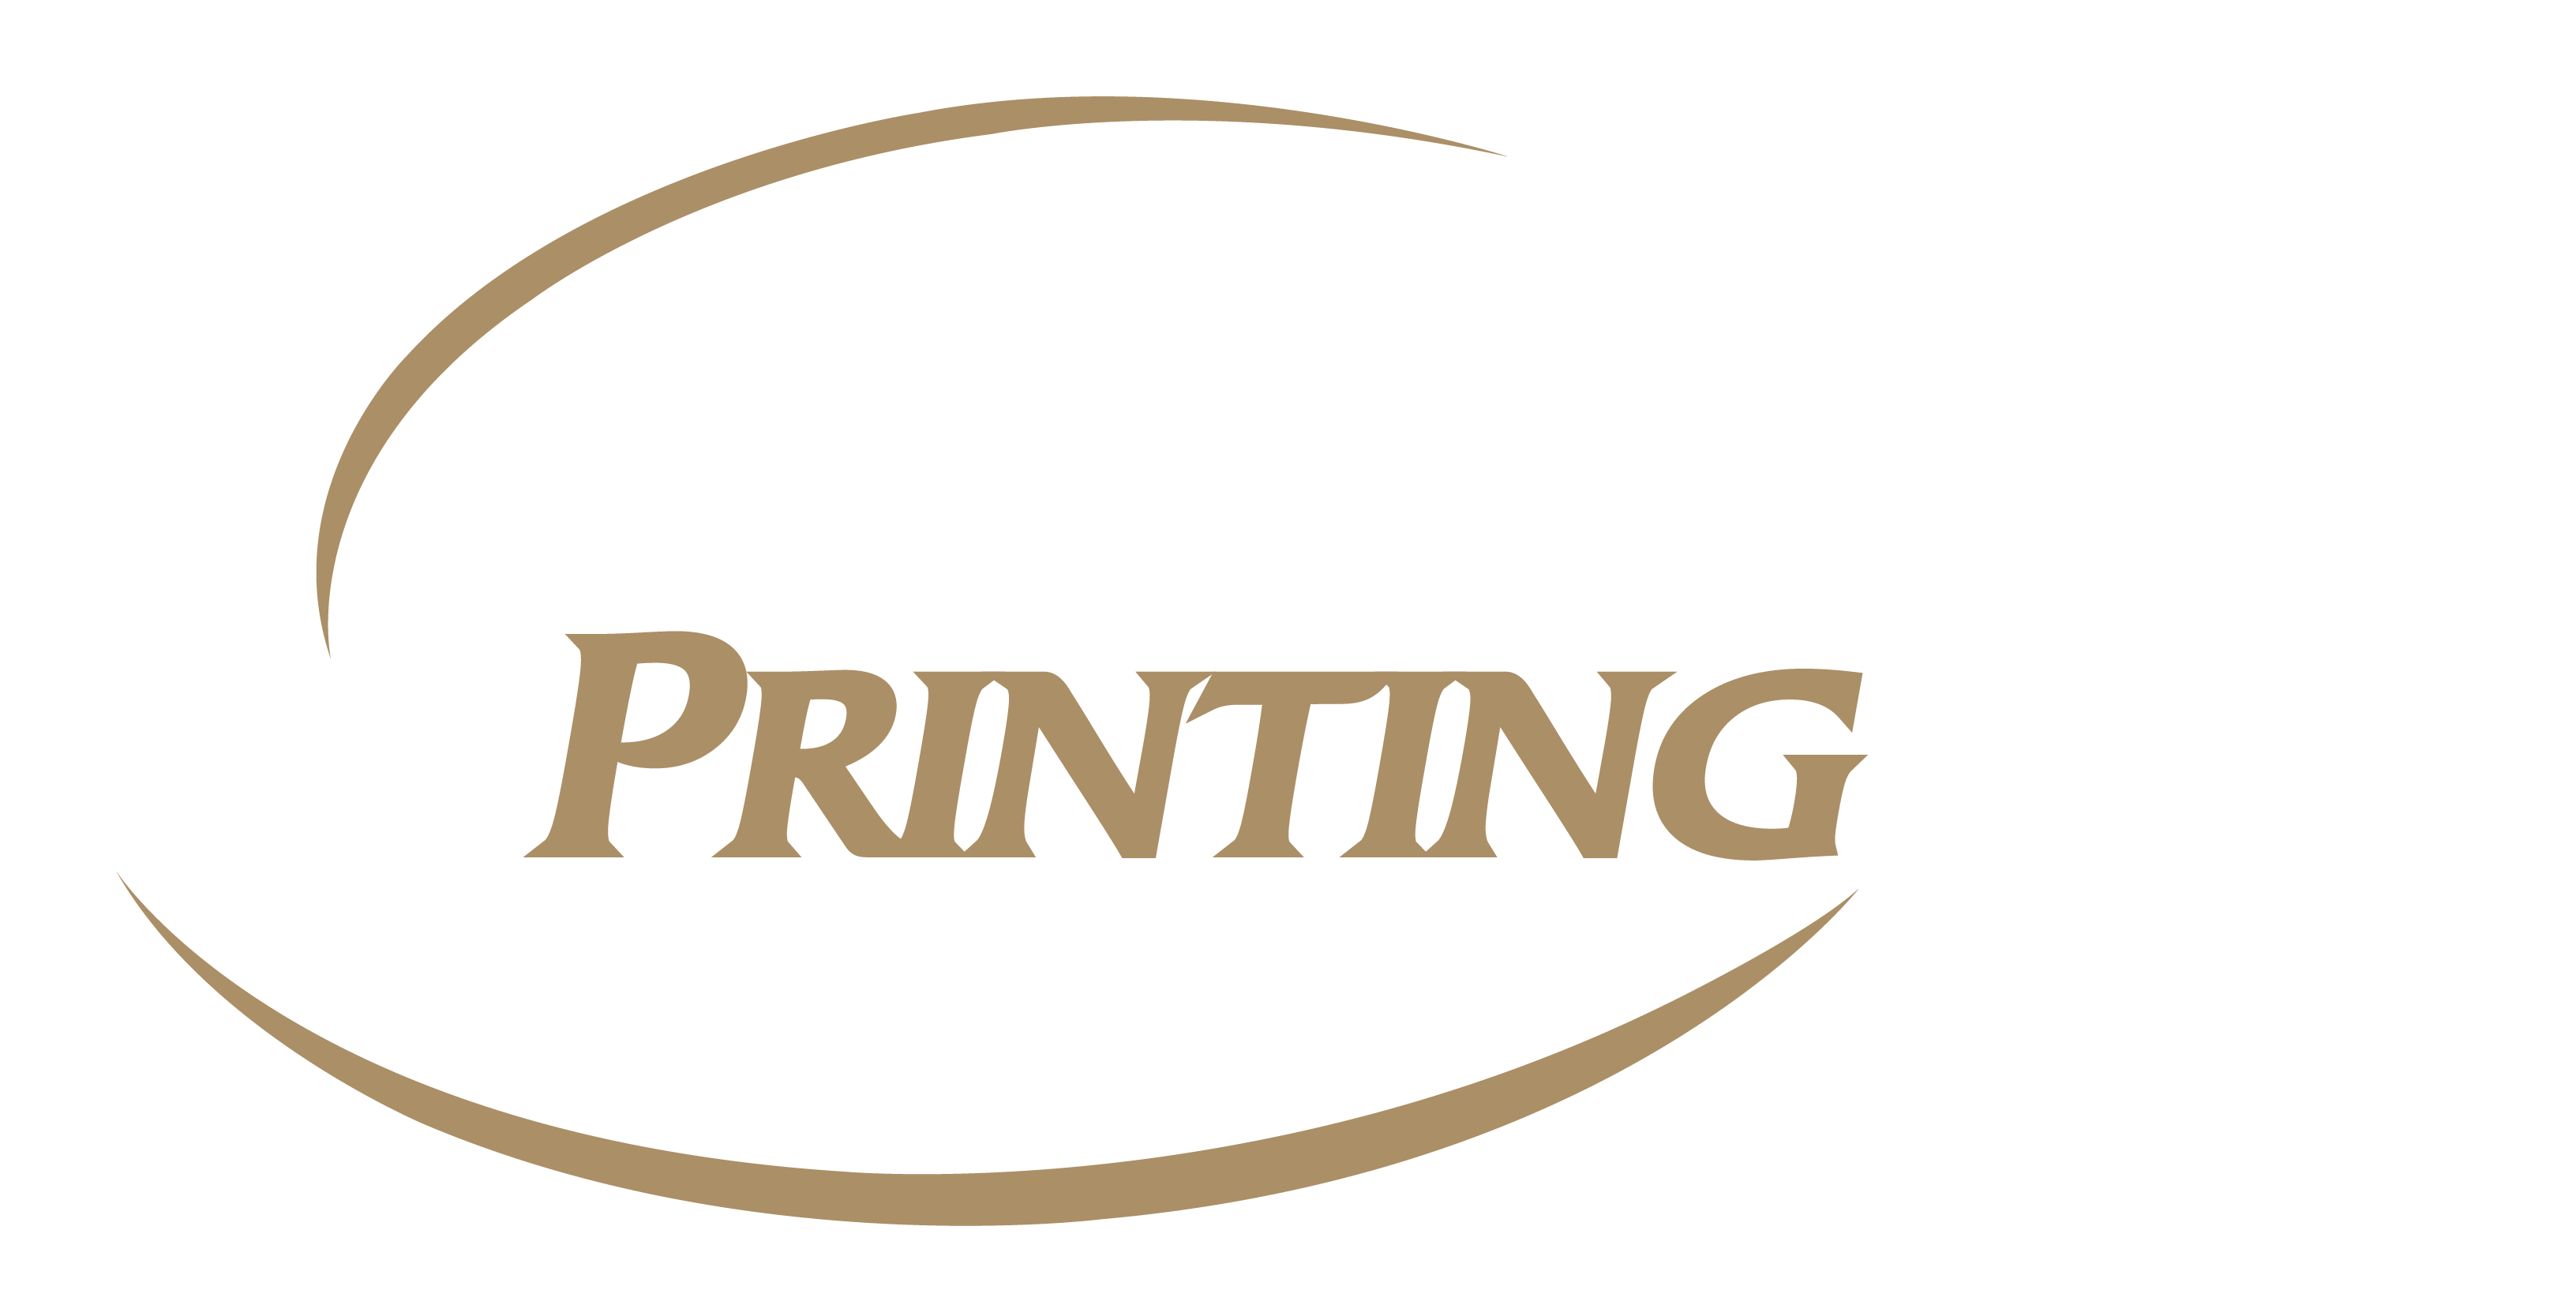 Renaissance Printing logo white and gold